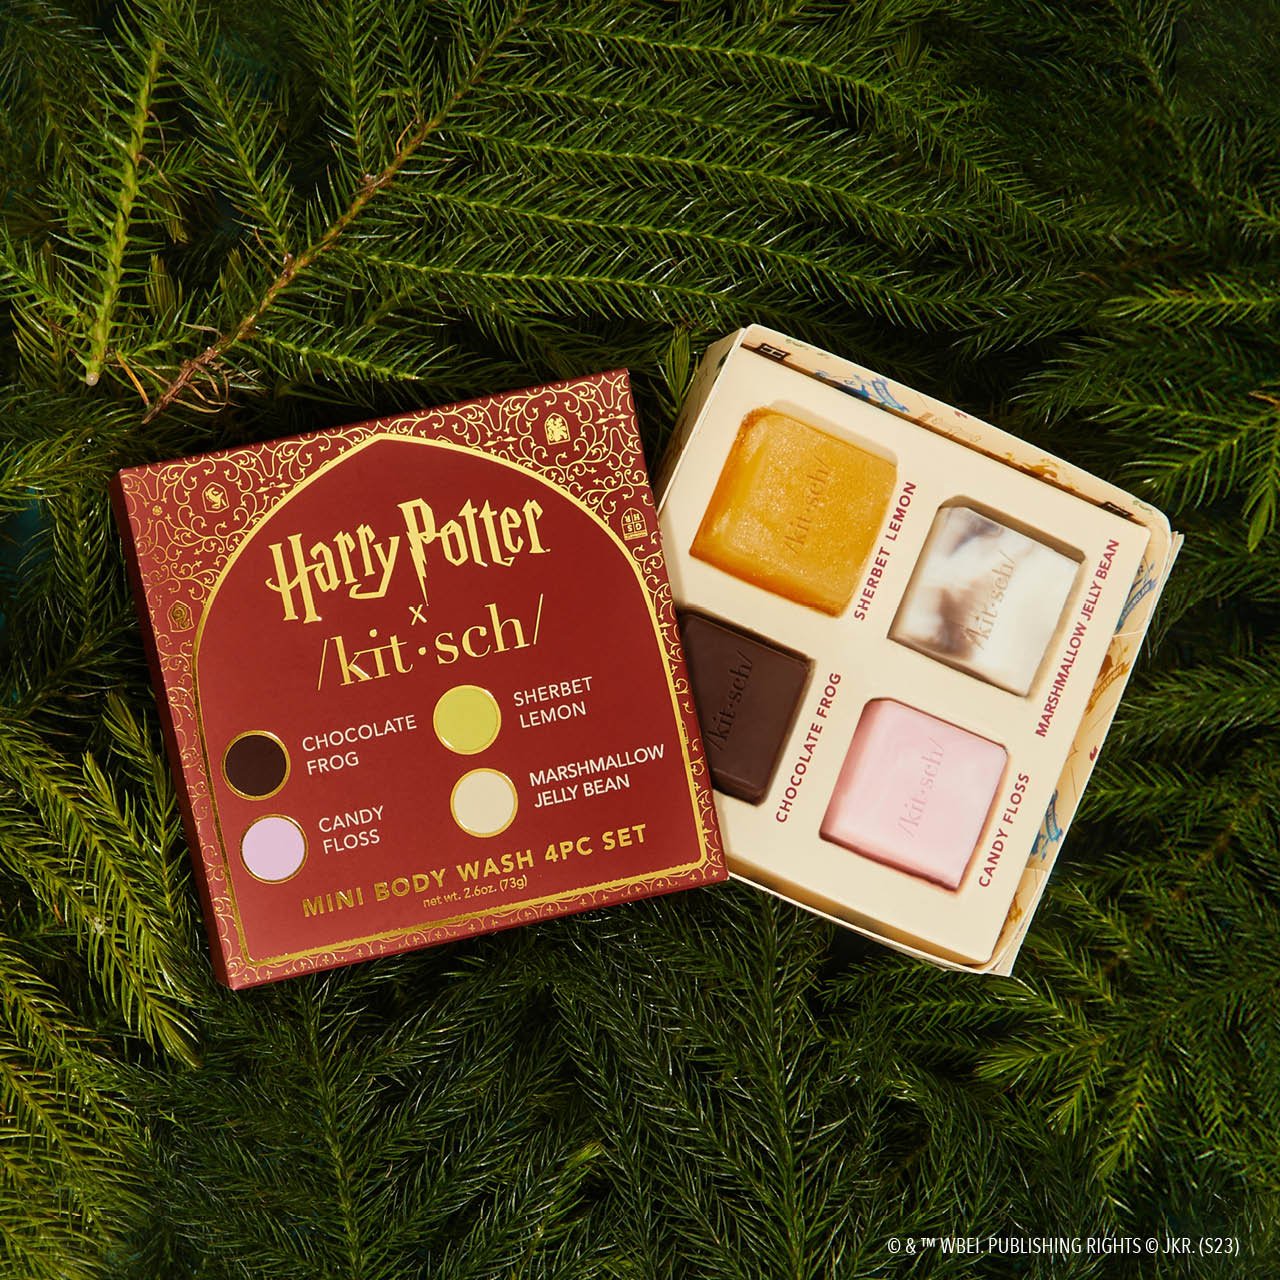 Harry Potter x Kitsch Body Wash 4pc Sampler Set